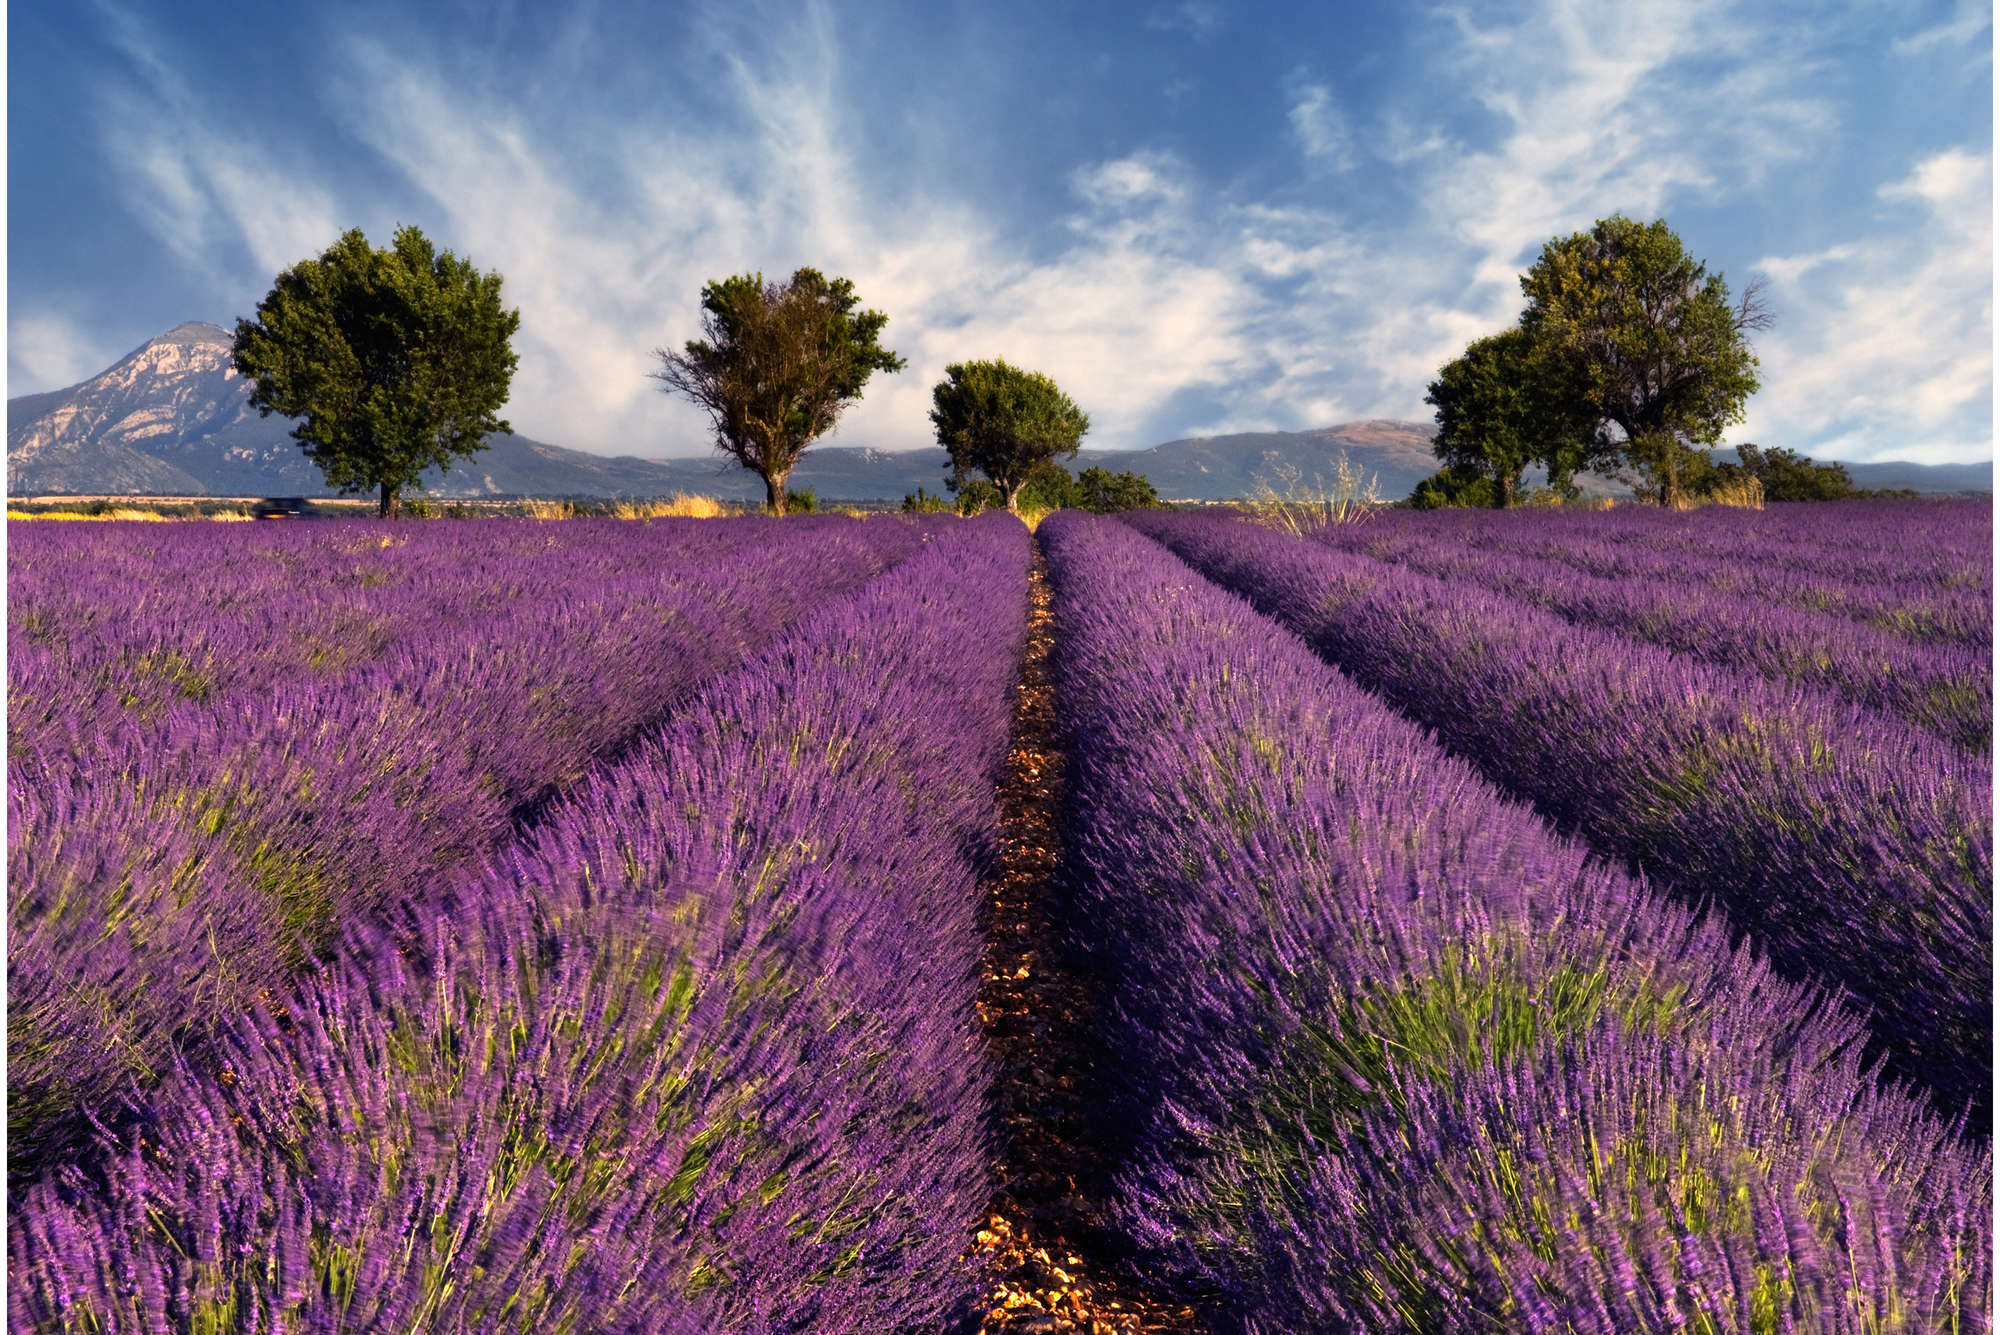             Natur Fototapete Feld mit Lavendel – Perlmutt Glattvlies
        